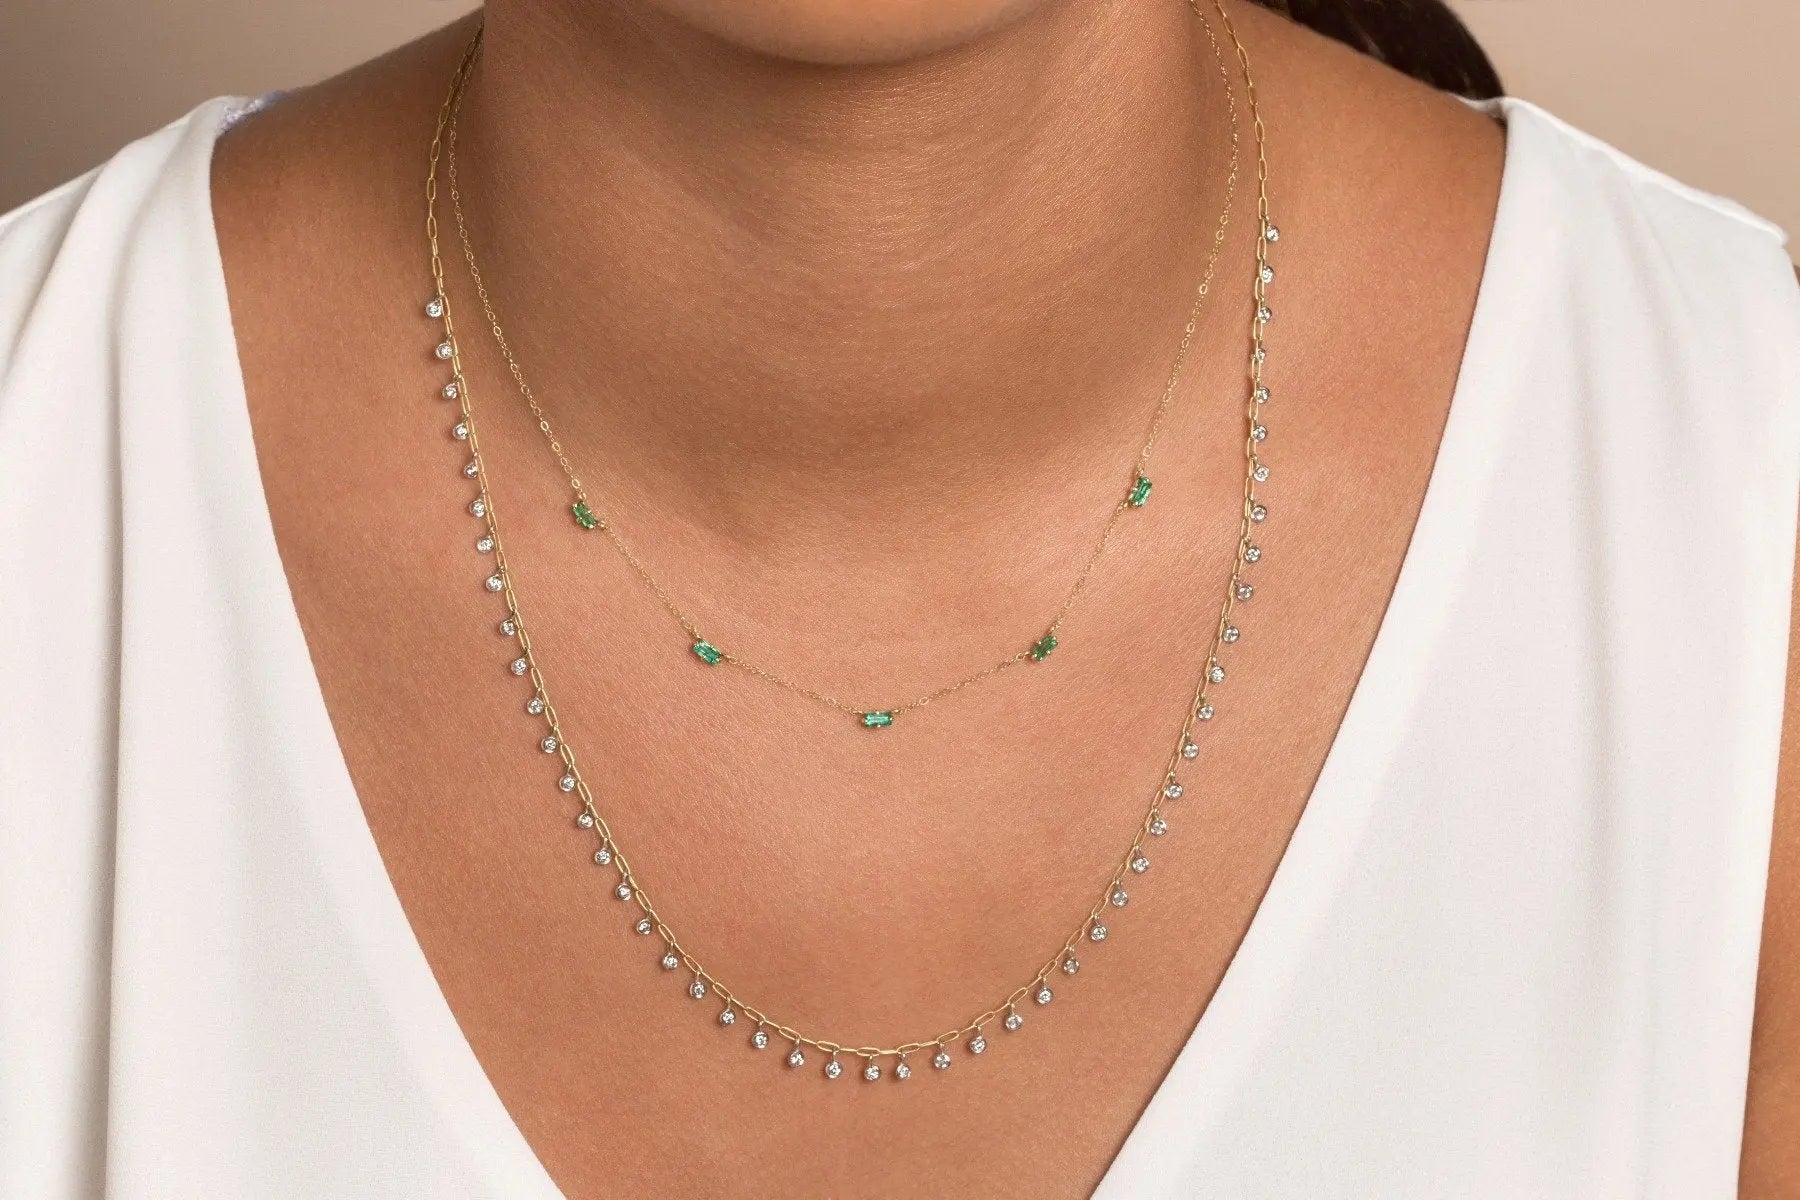 Ephemeral Diamond Necklace - Squash Blossom Vail